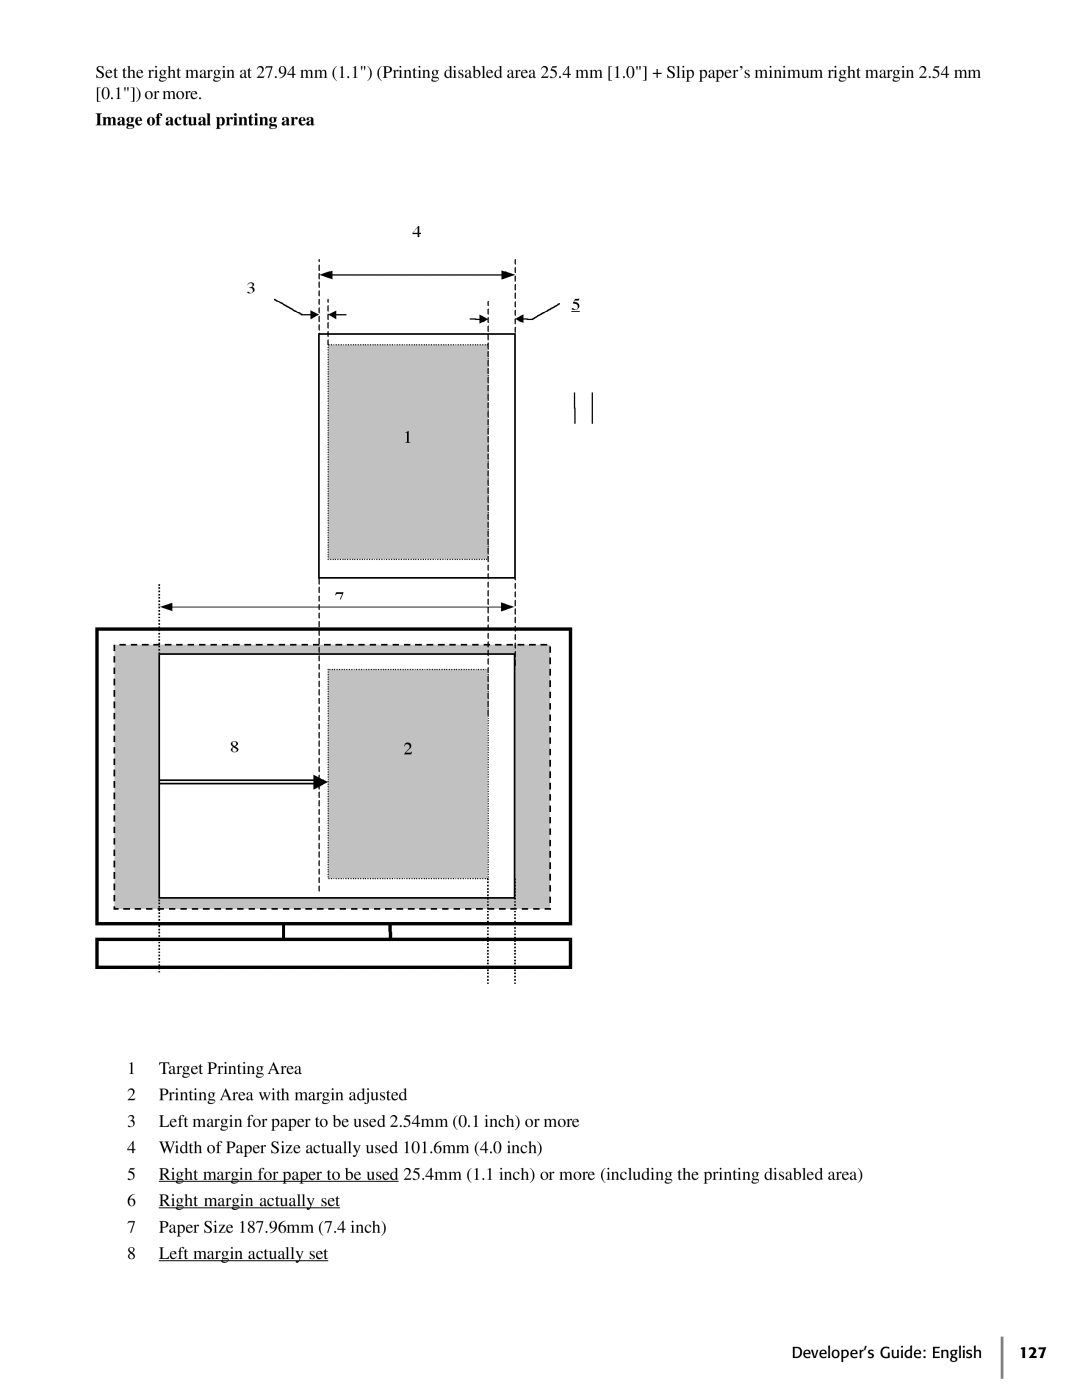 Oki 425D manual Image of actual printing area 